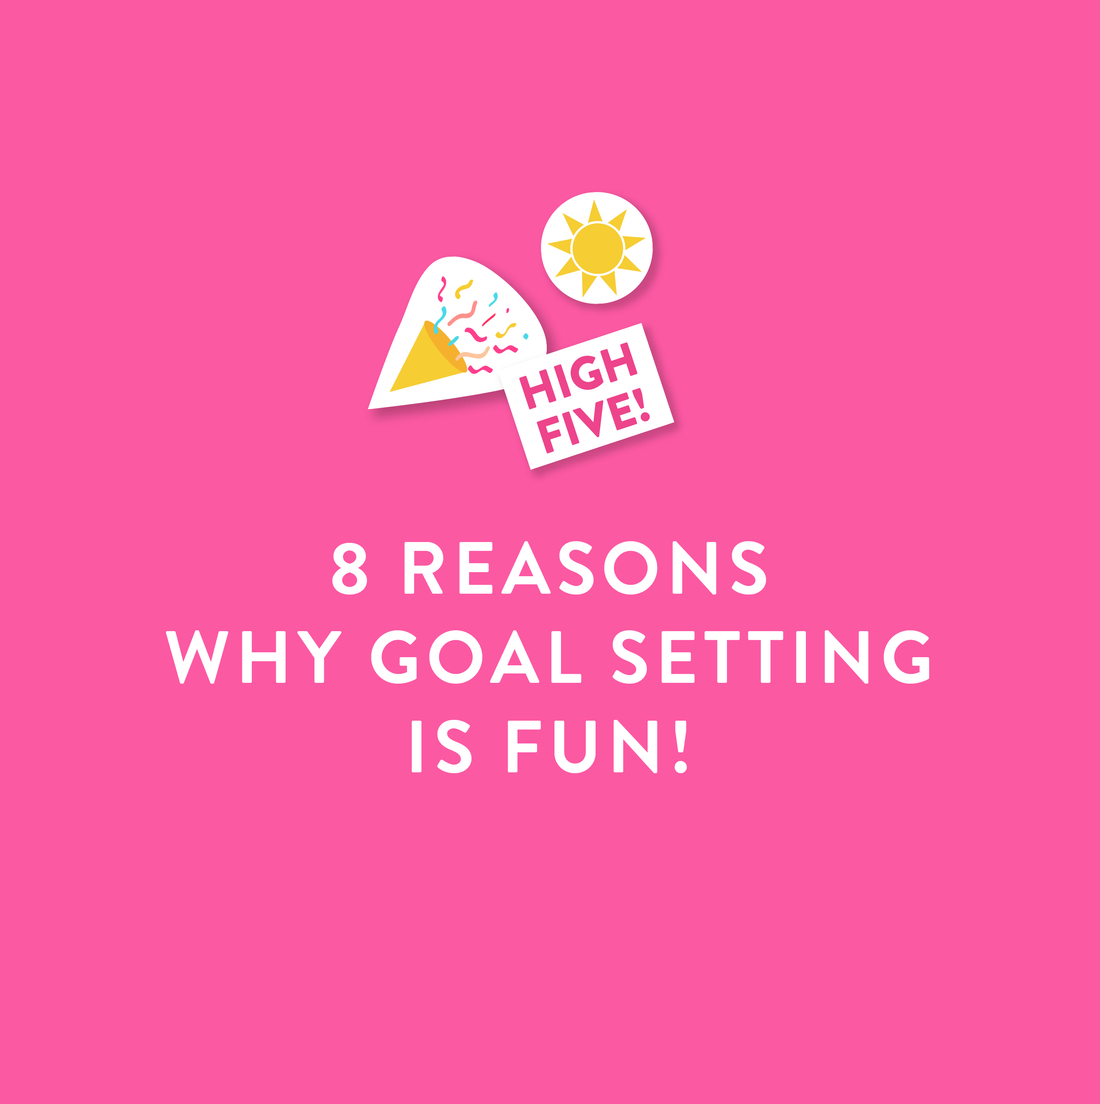 8 Reasons Why #GoalSettingIsFun!